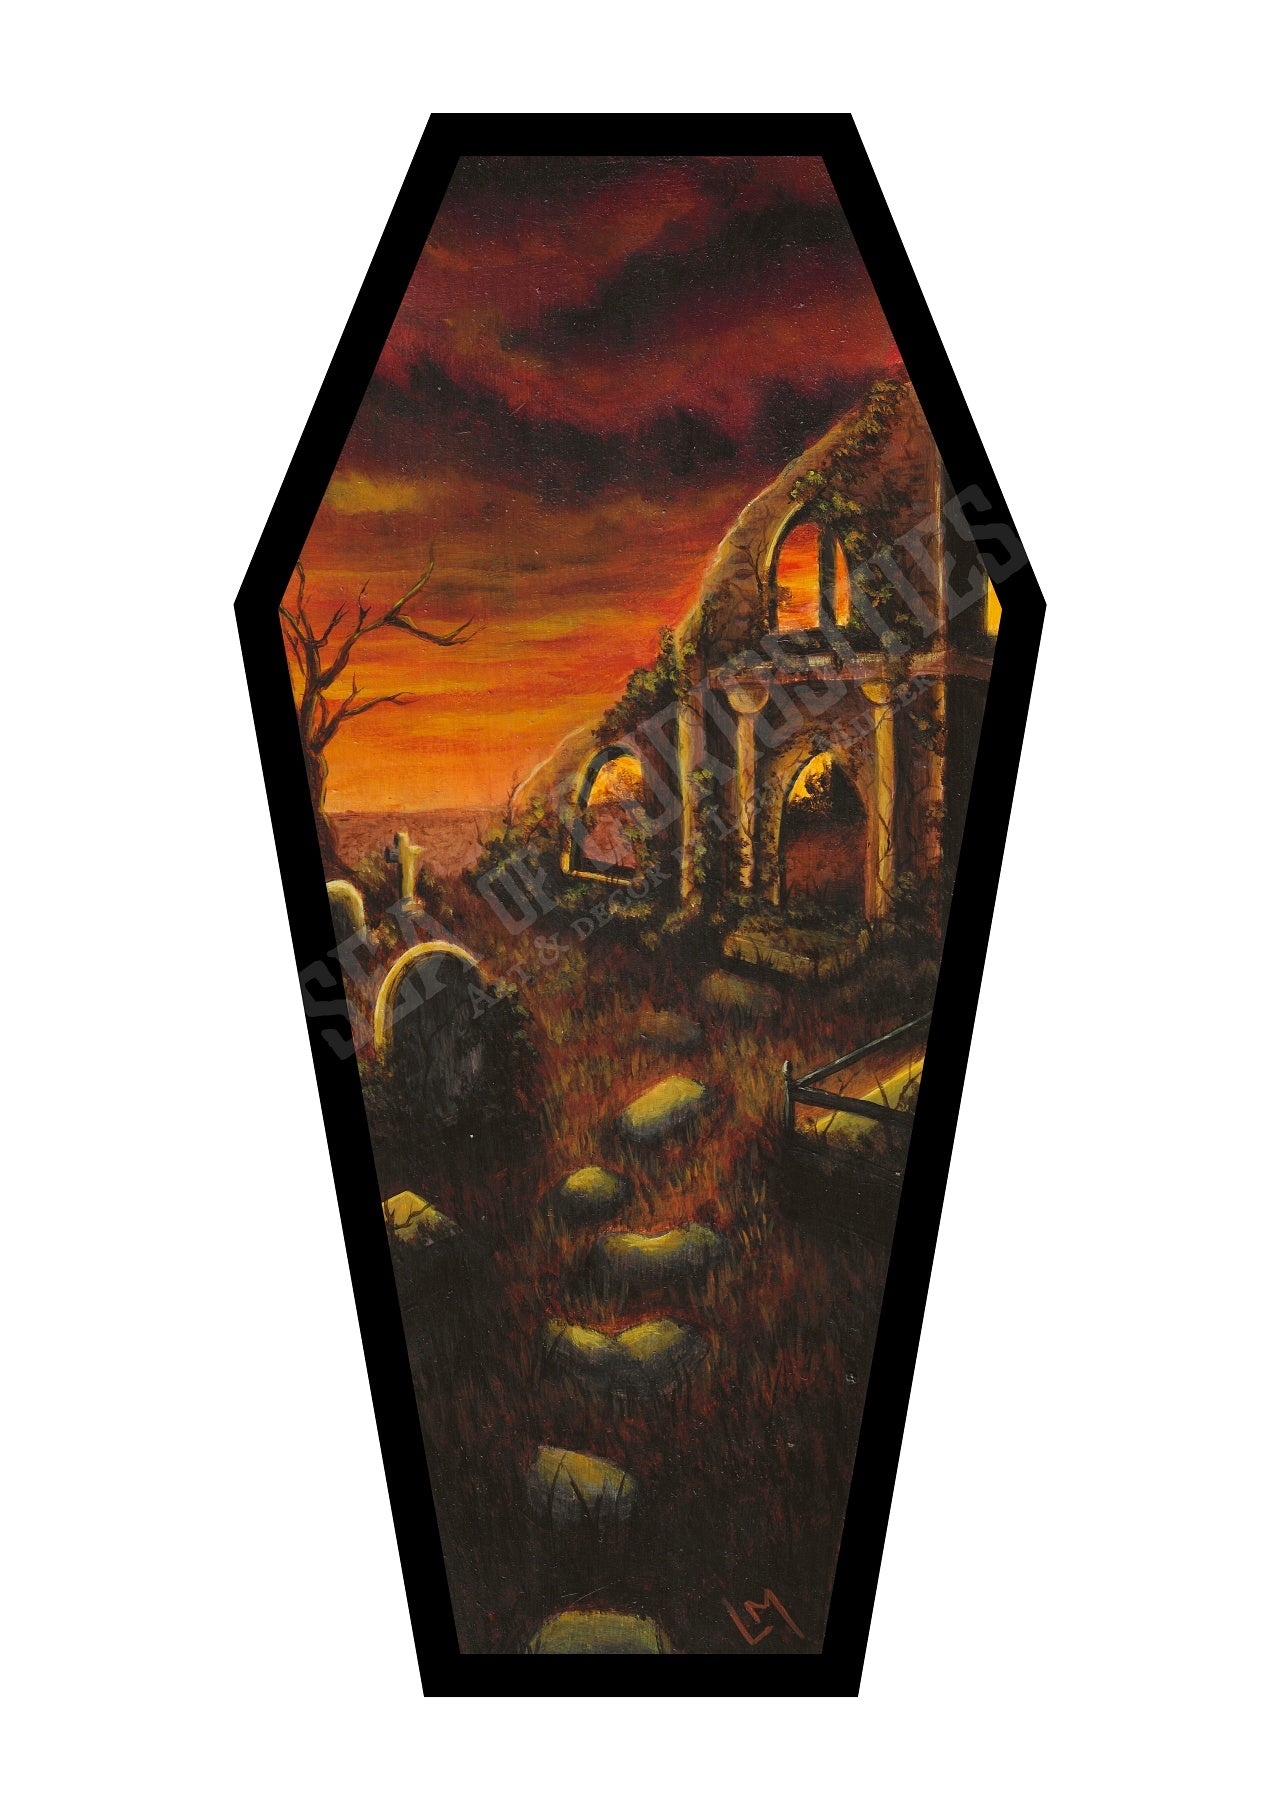 Suns farewell amongst ruined reverence - Forgotten Tombs series - Art Print